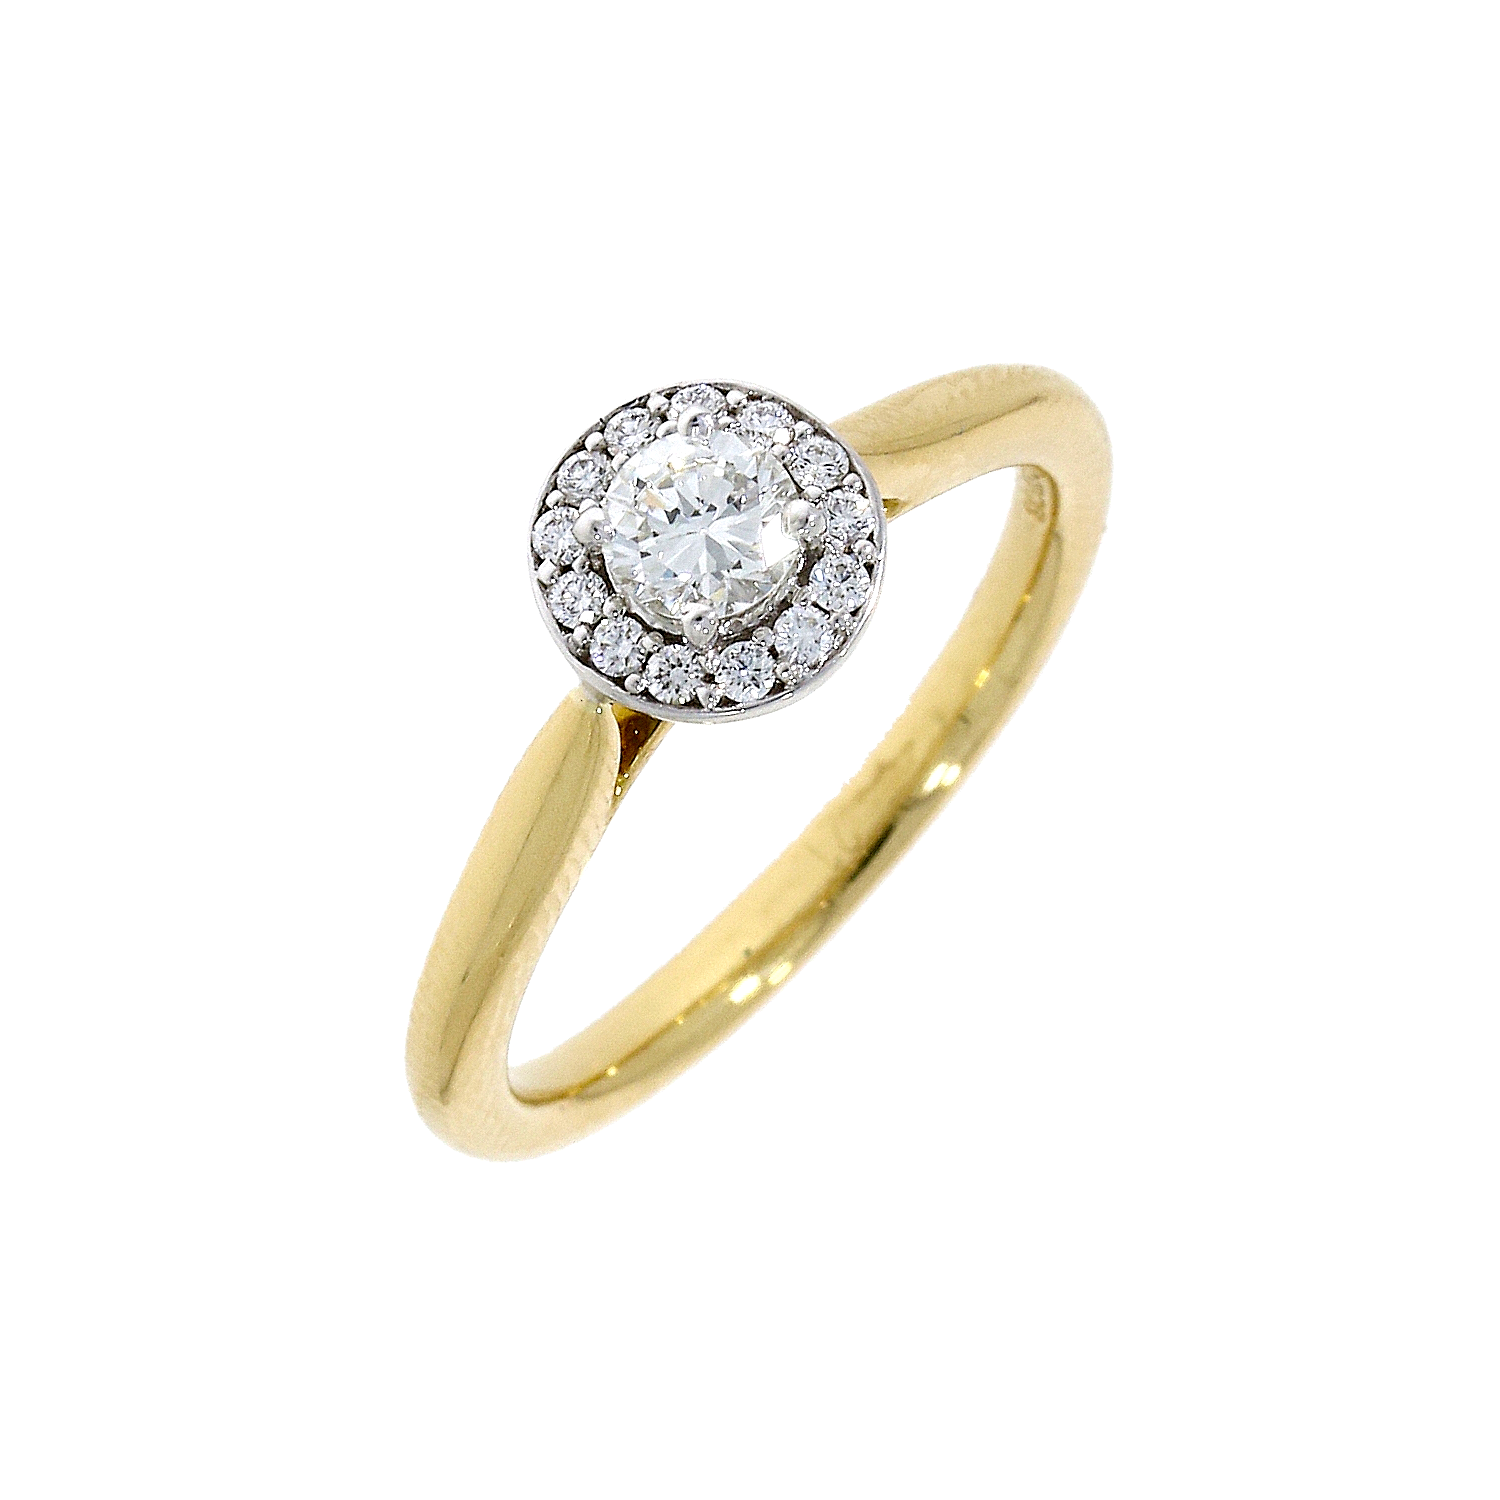 18ct. Yellow Gold Diamond Halo Engagement Ring - 0.48cts